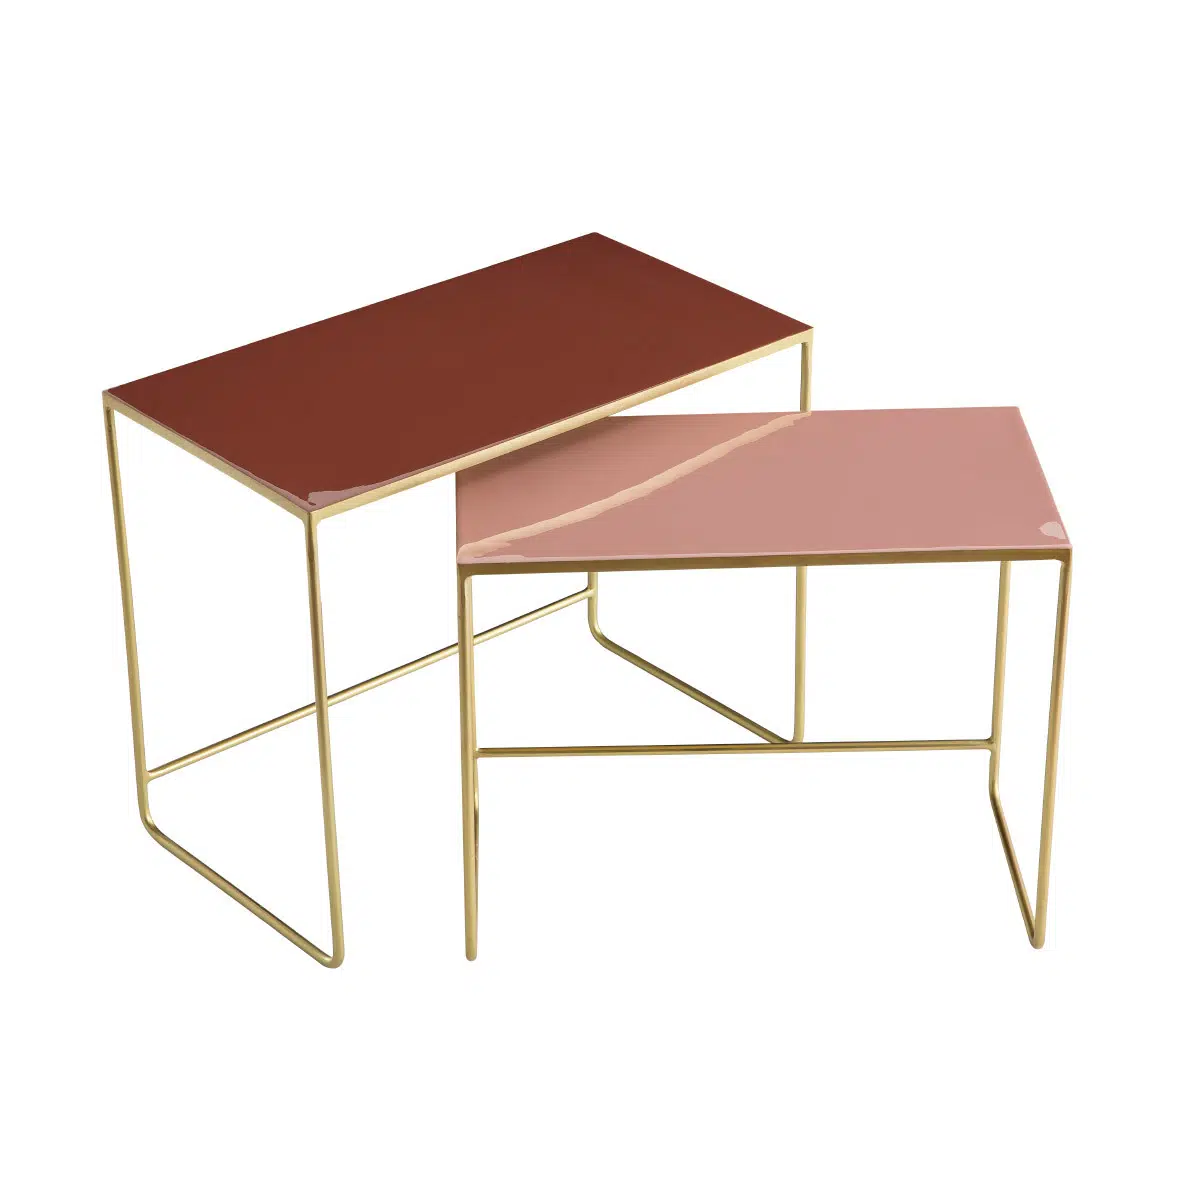 Tables basses gigognes rectangulaires design terracotta